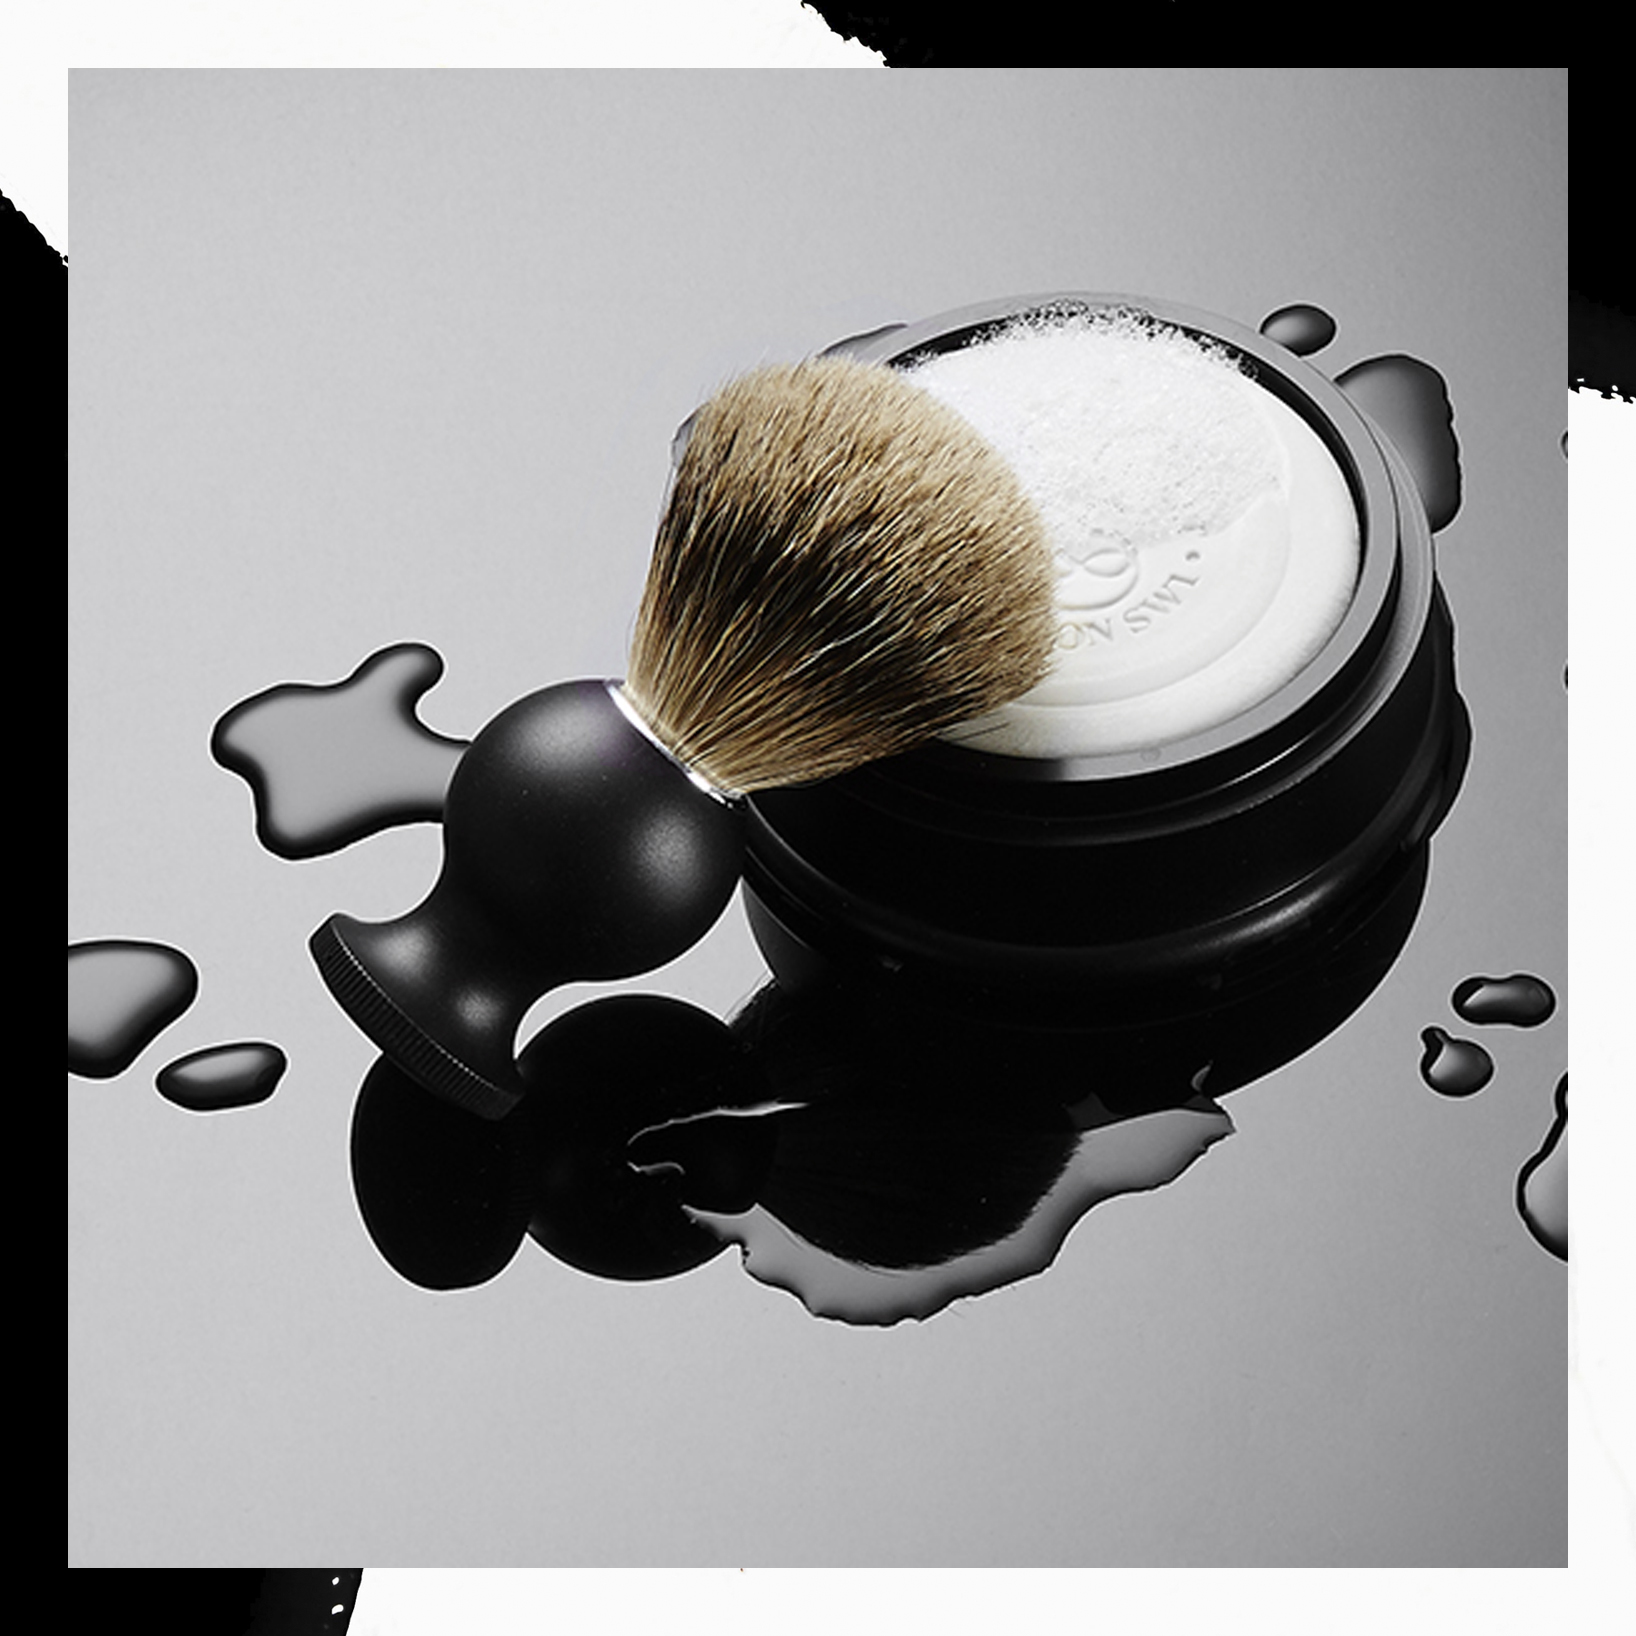 No.88 black aluminium traditional shaving brush and soap in water